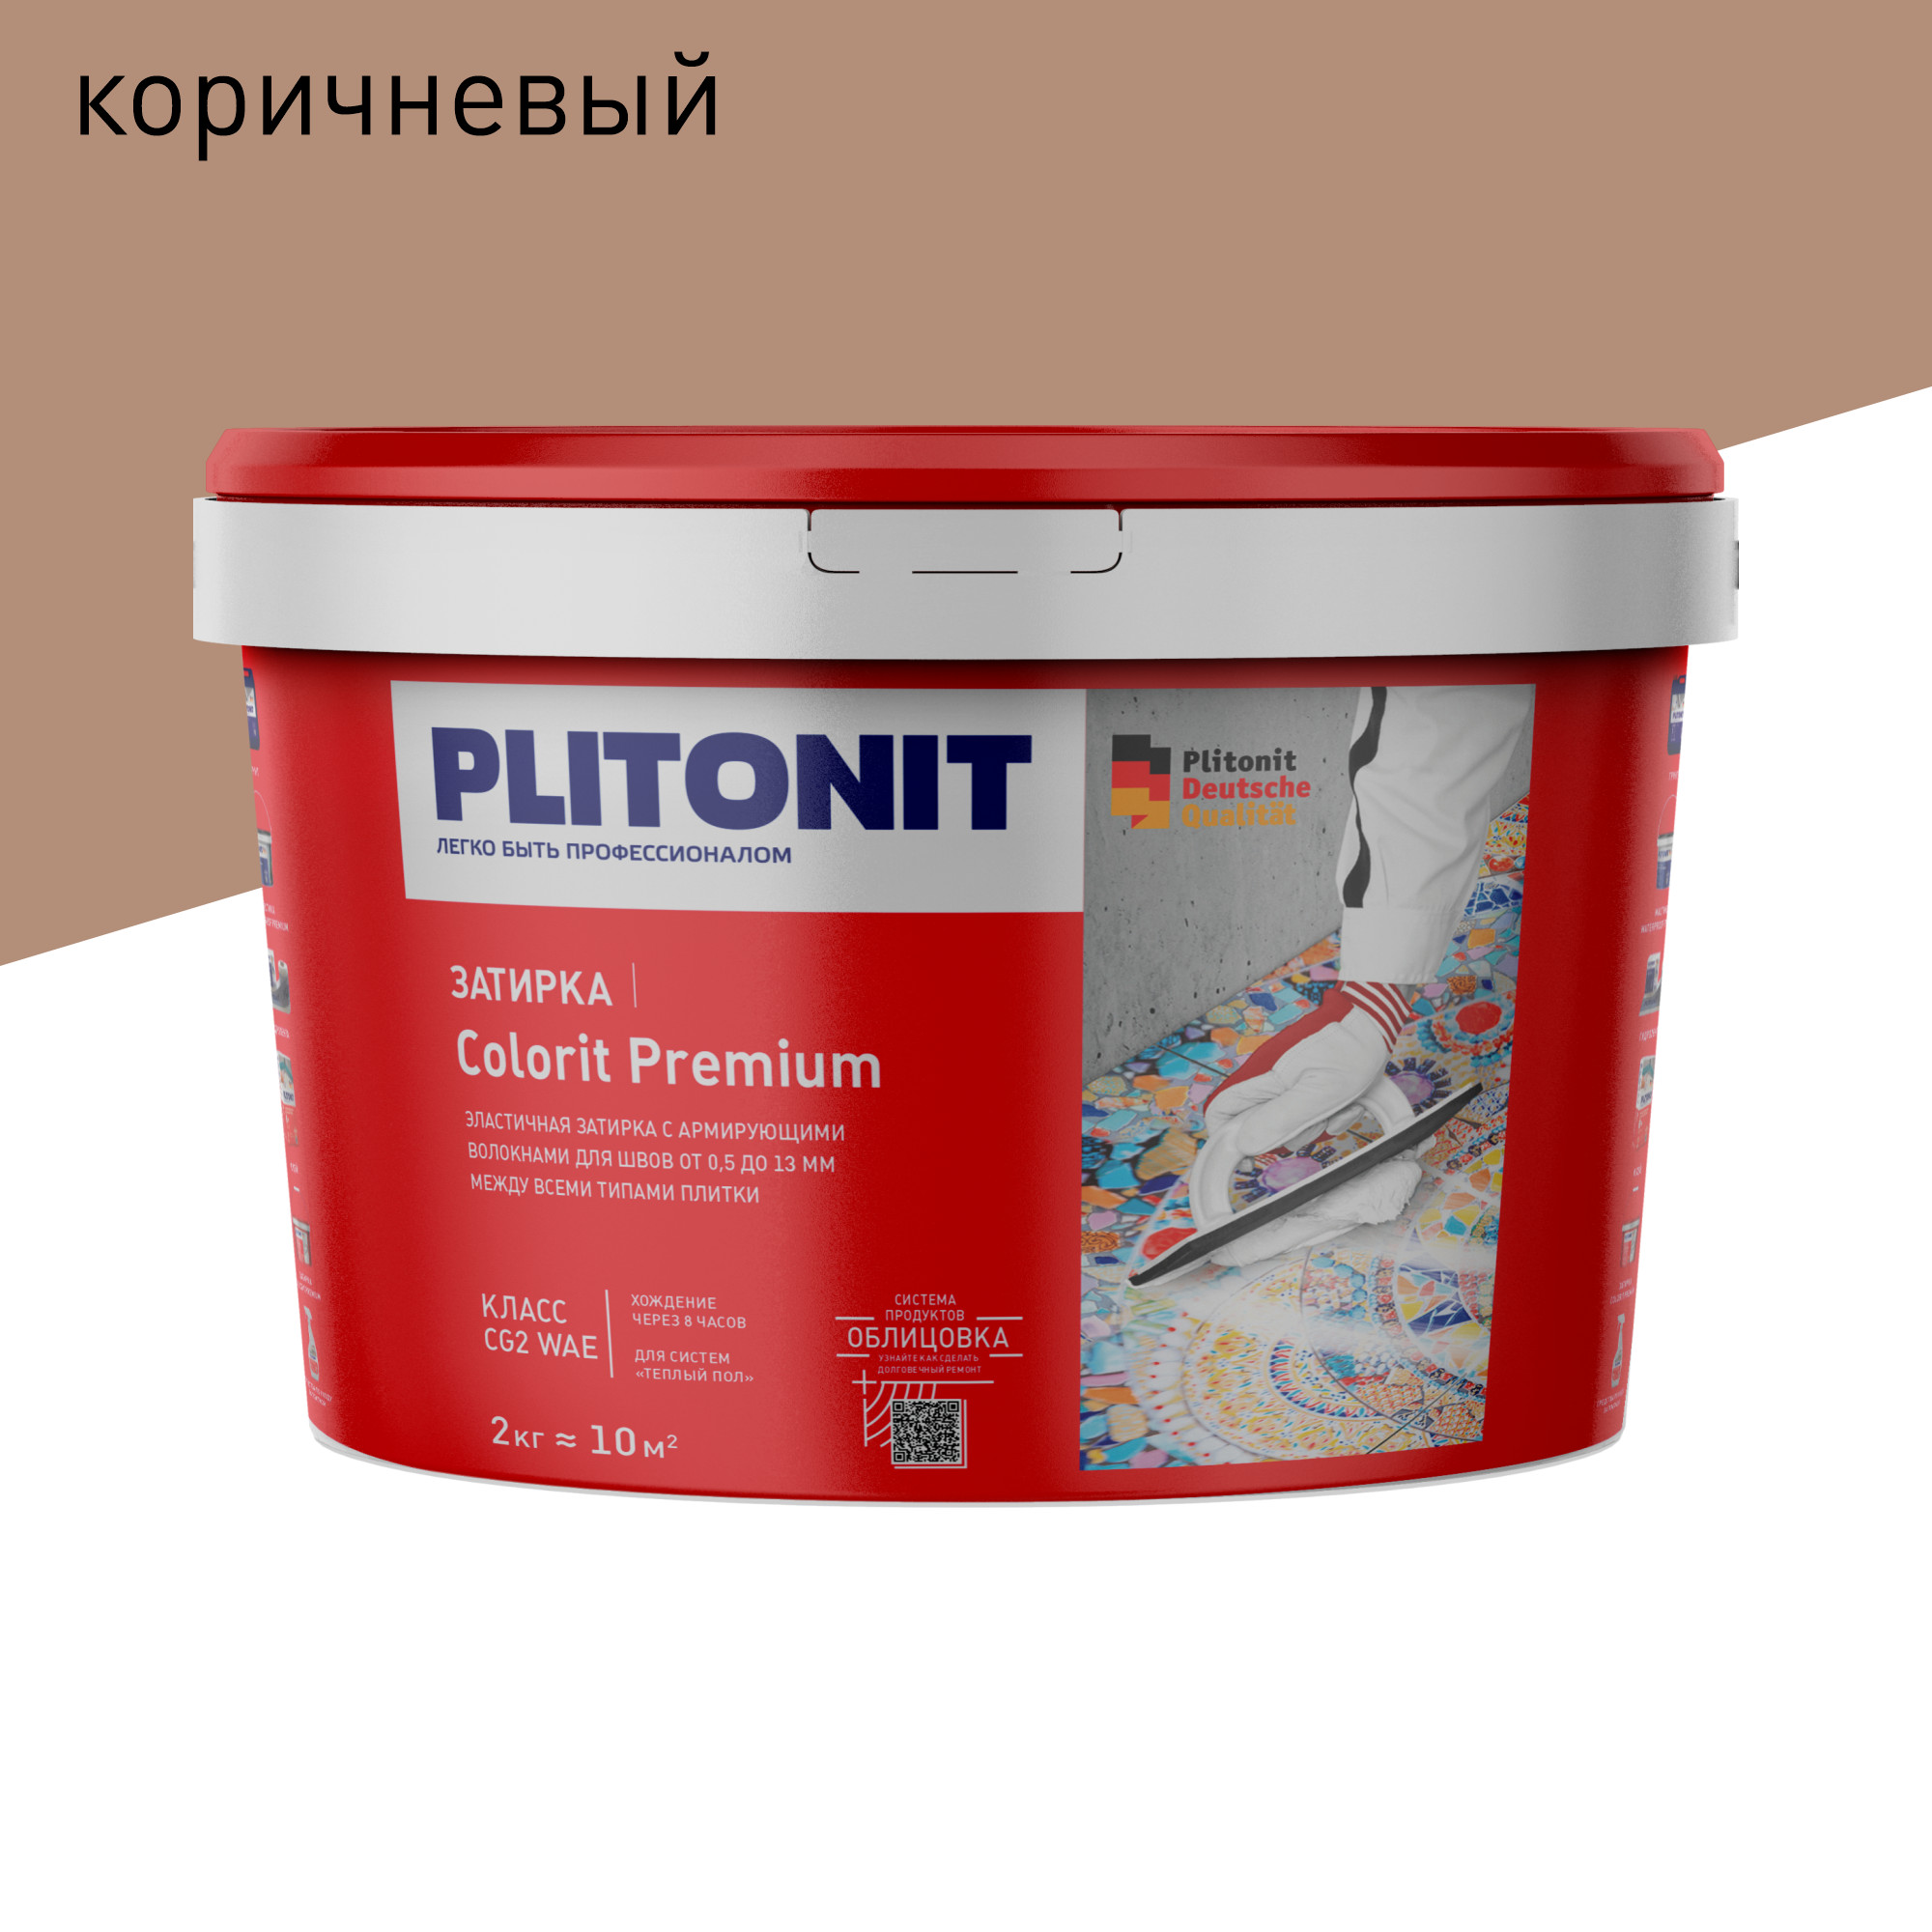 Затирка PLITONIT Colorit Premium коричневая 2 кг затирка plitonit